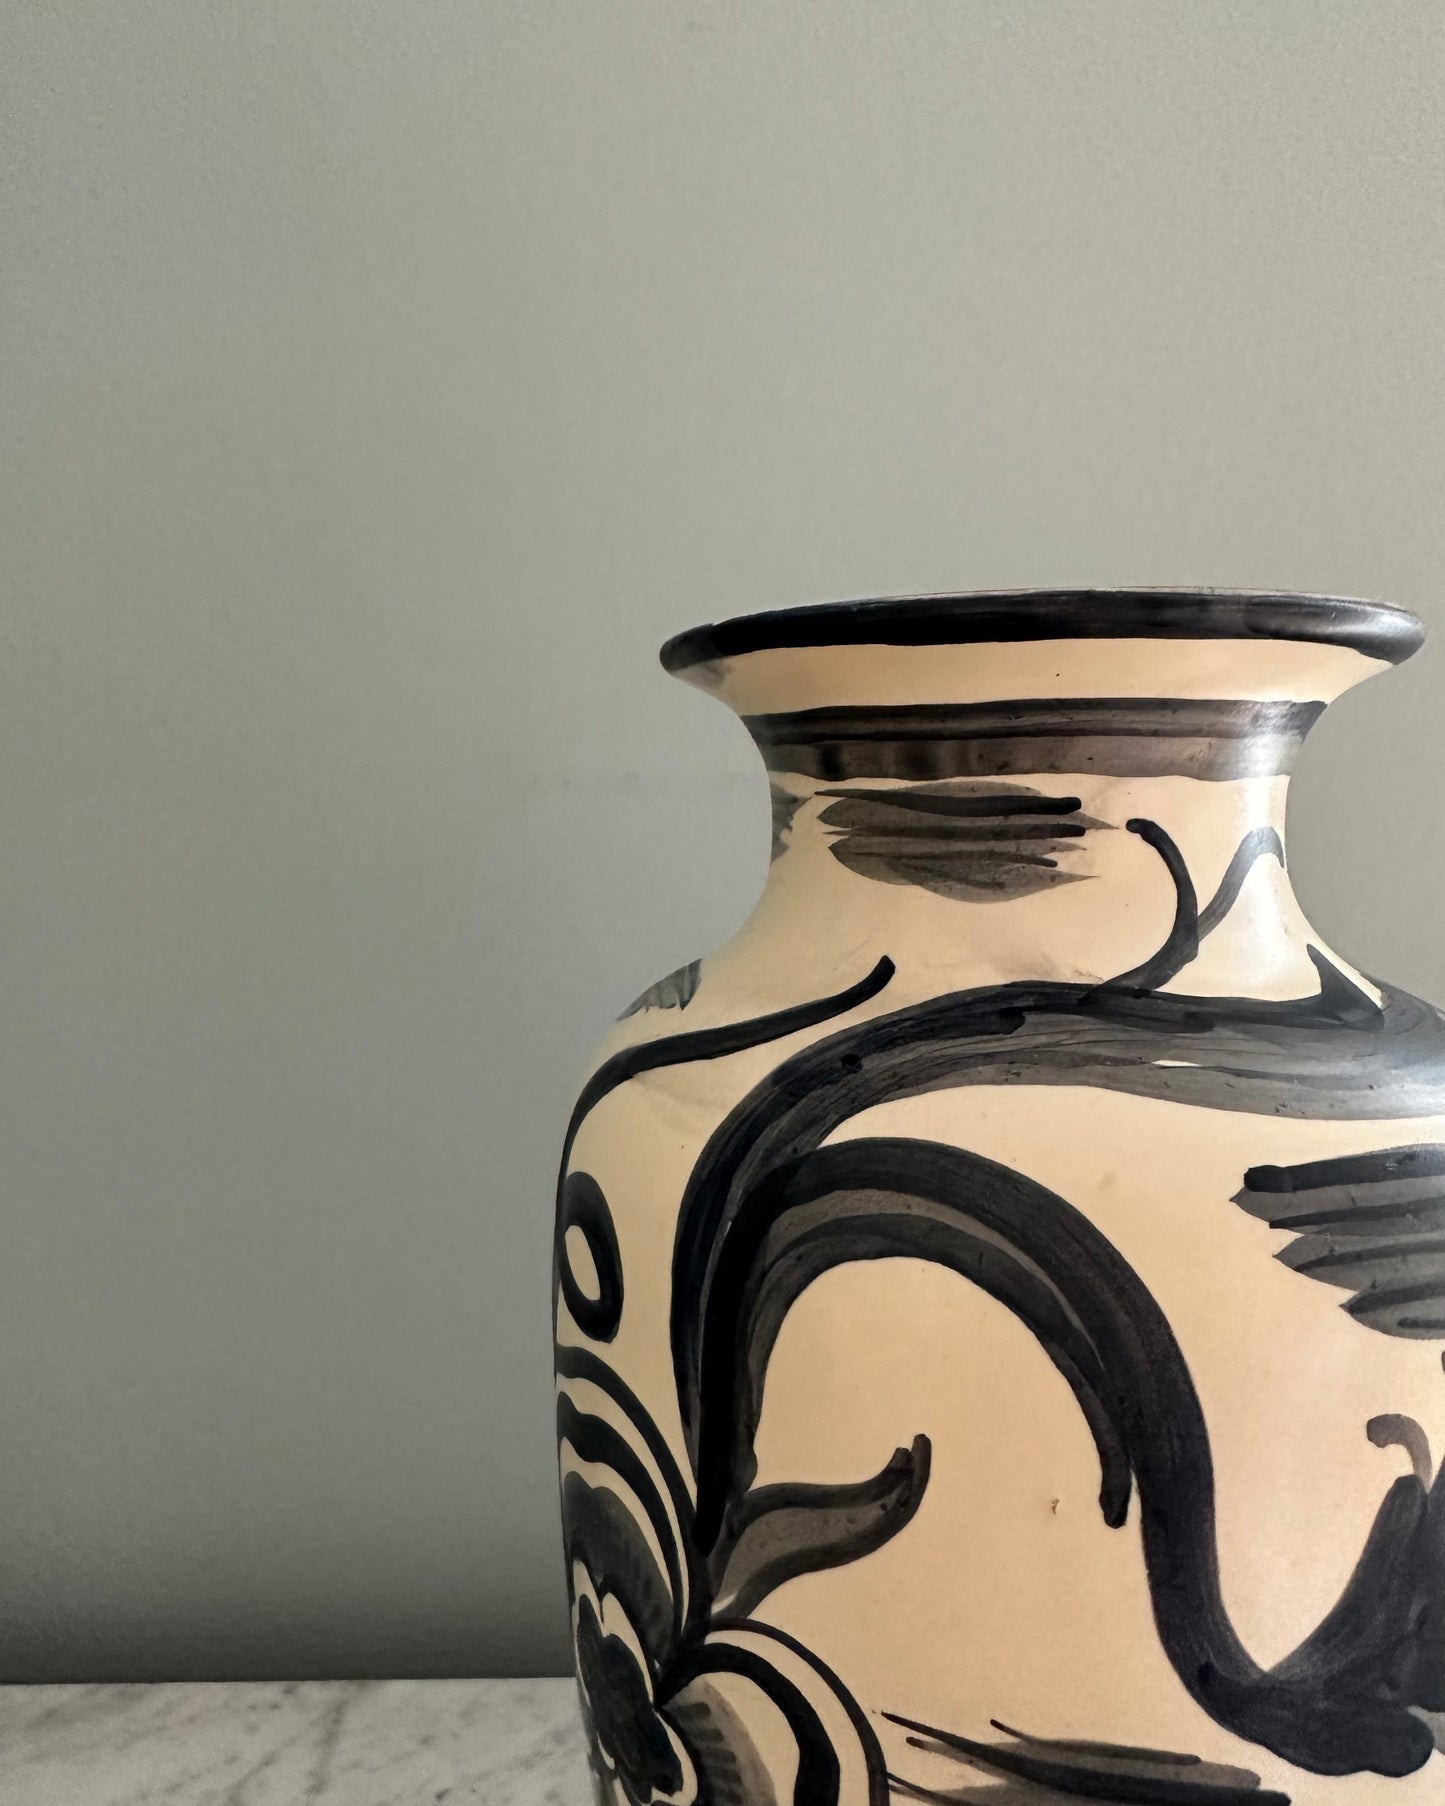 Hand Painted Ceramic Vase - Gefle Sweden